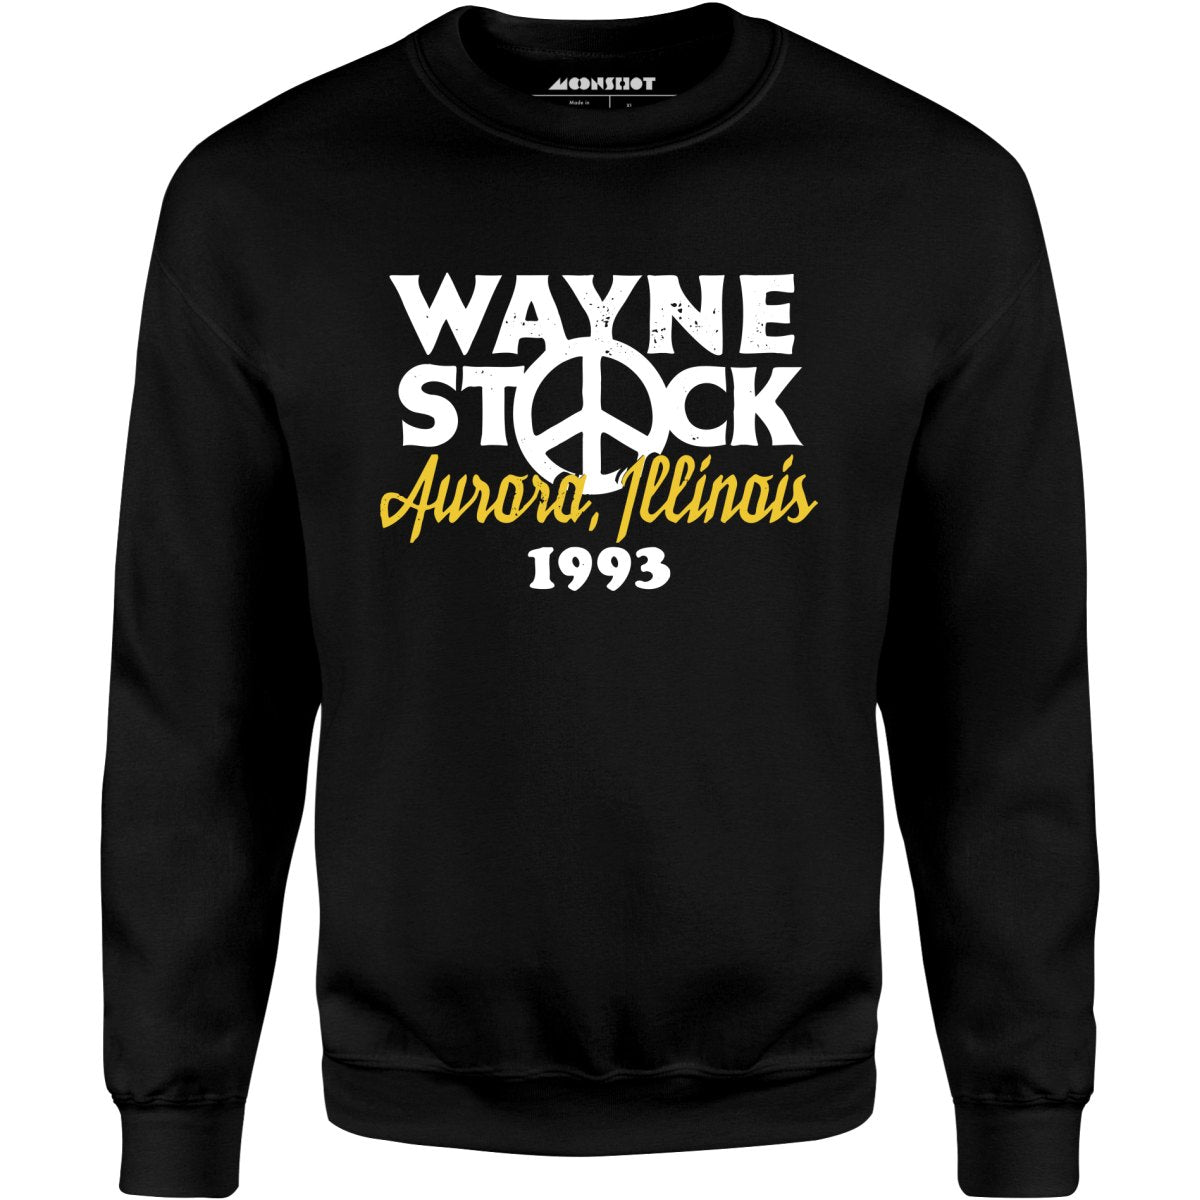 Waynestock 1993 - Unisex Sweatshirt